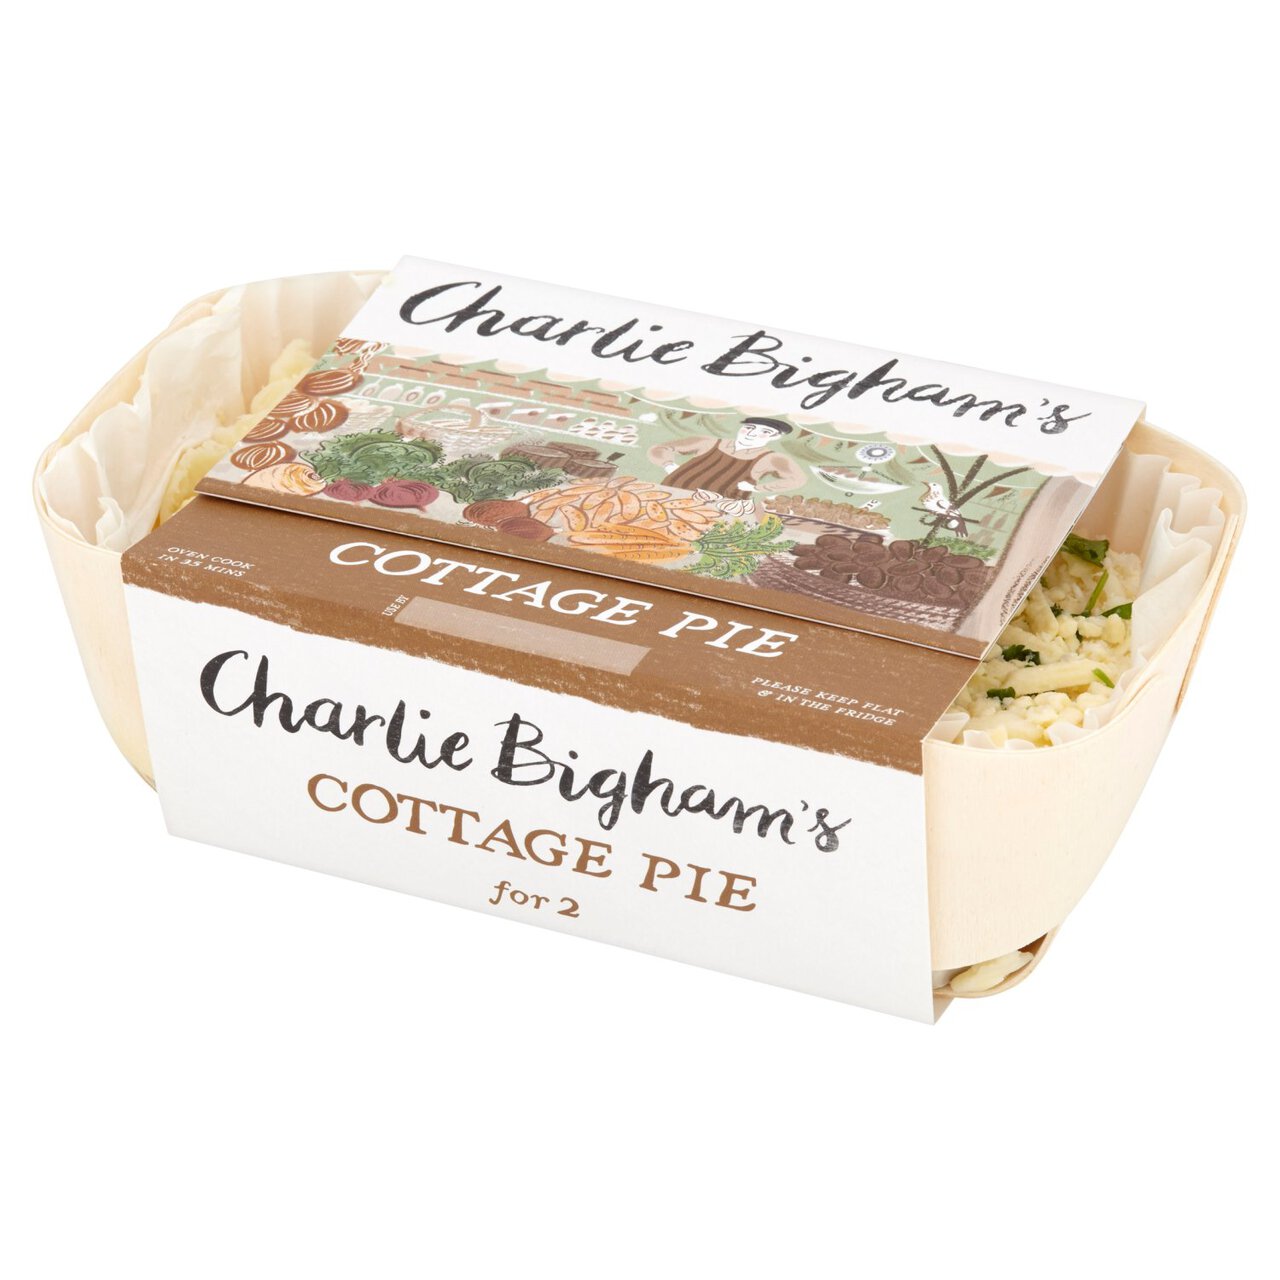 Charlie Bigham's Cottage Pie for 2 650g